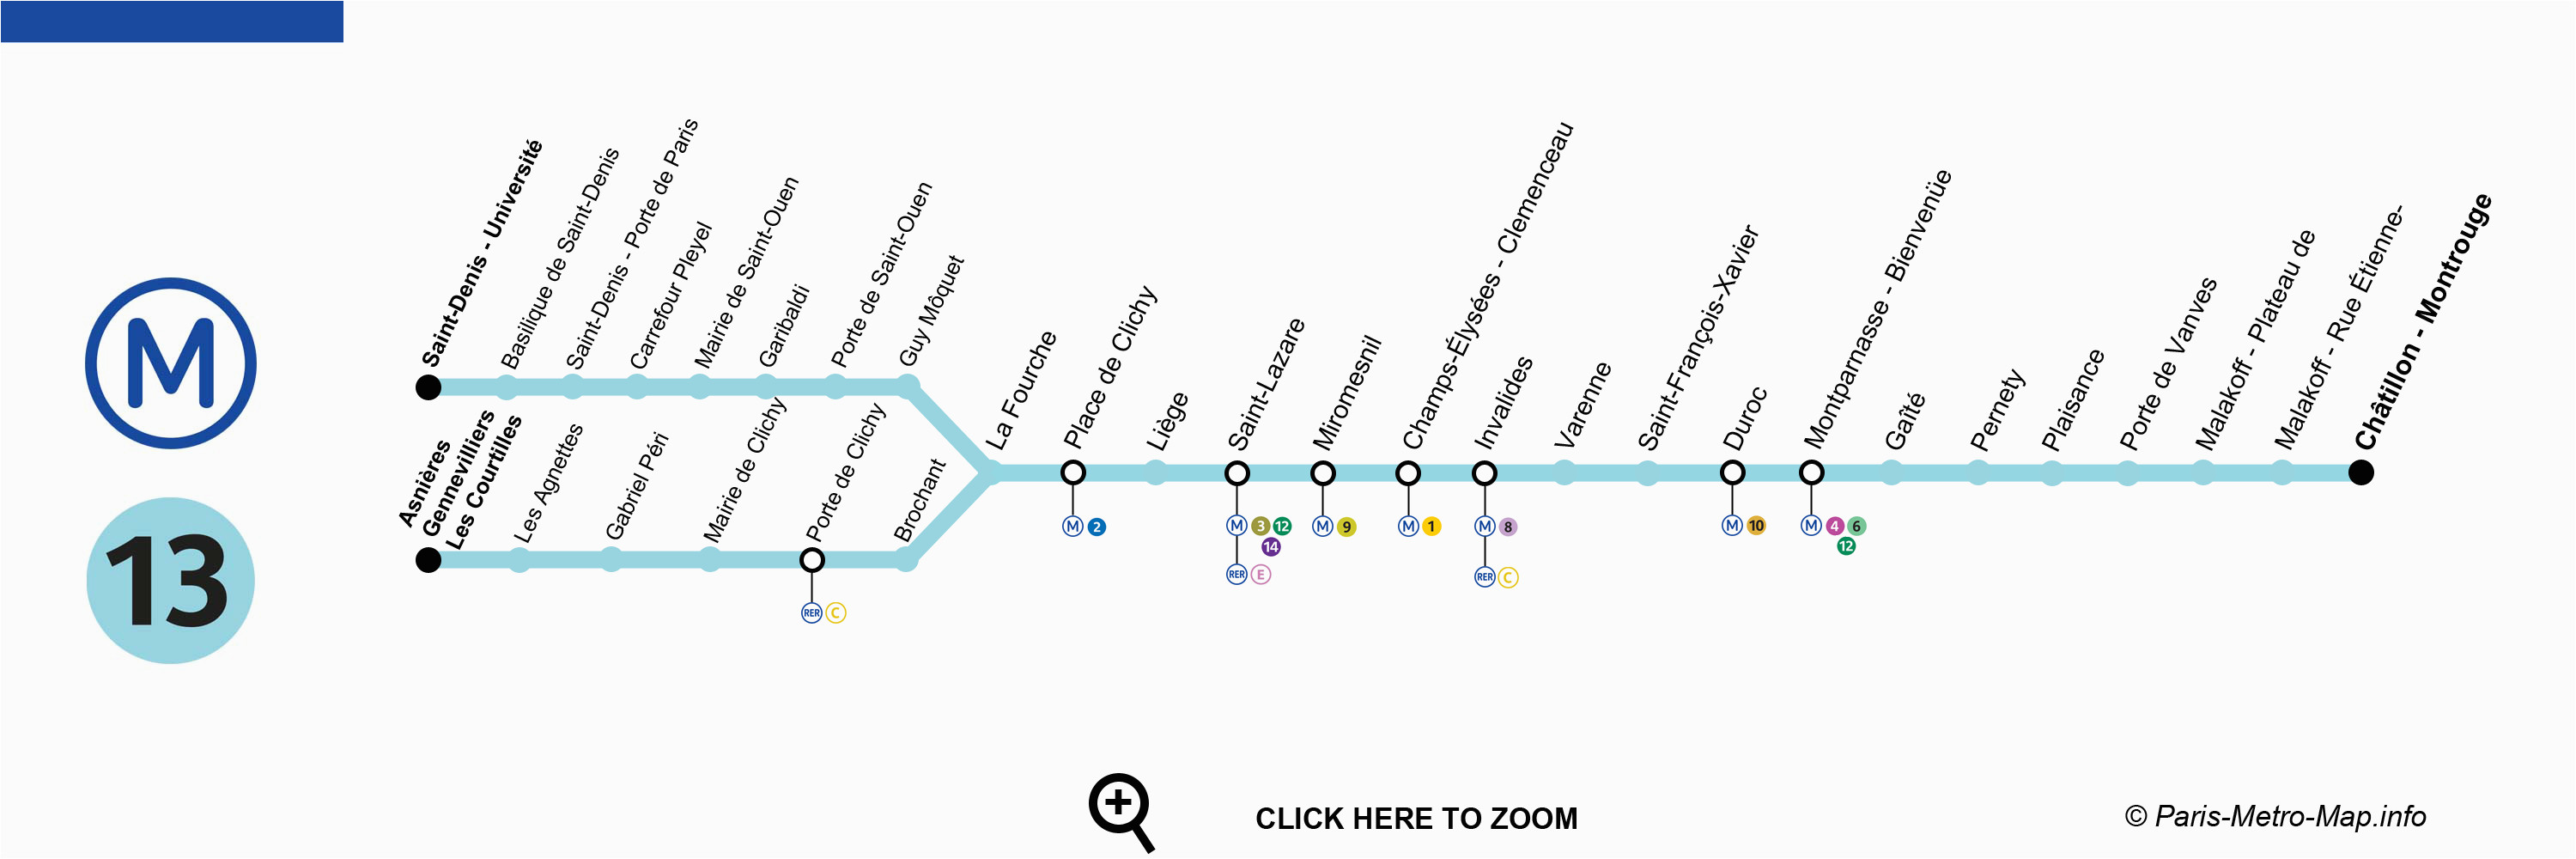 paris metro line 13 map schedule ticket stations